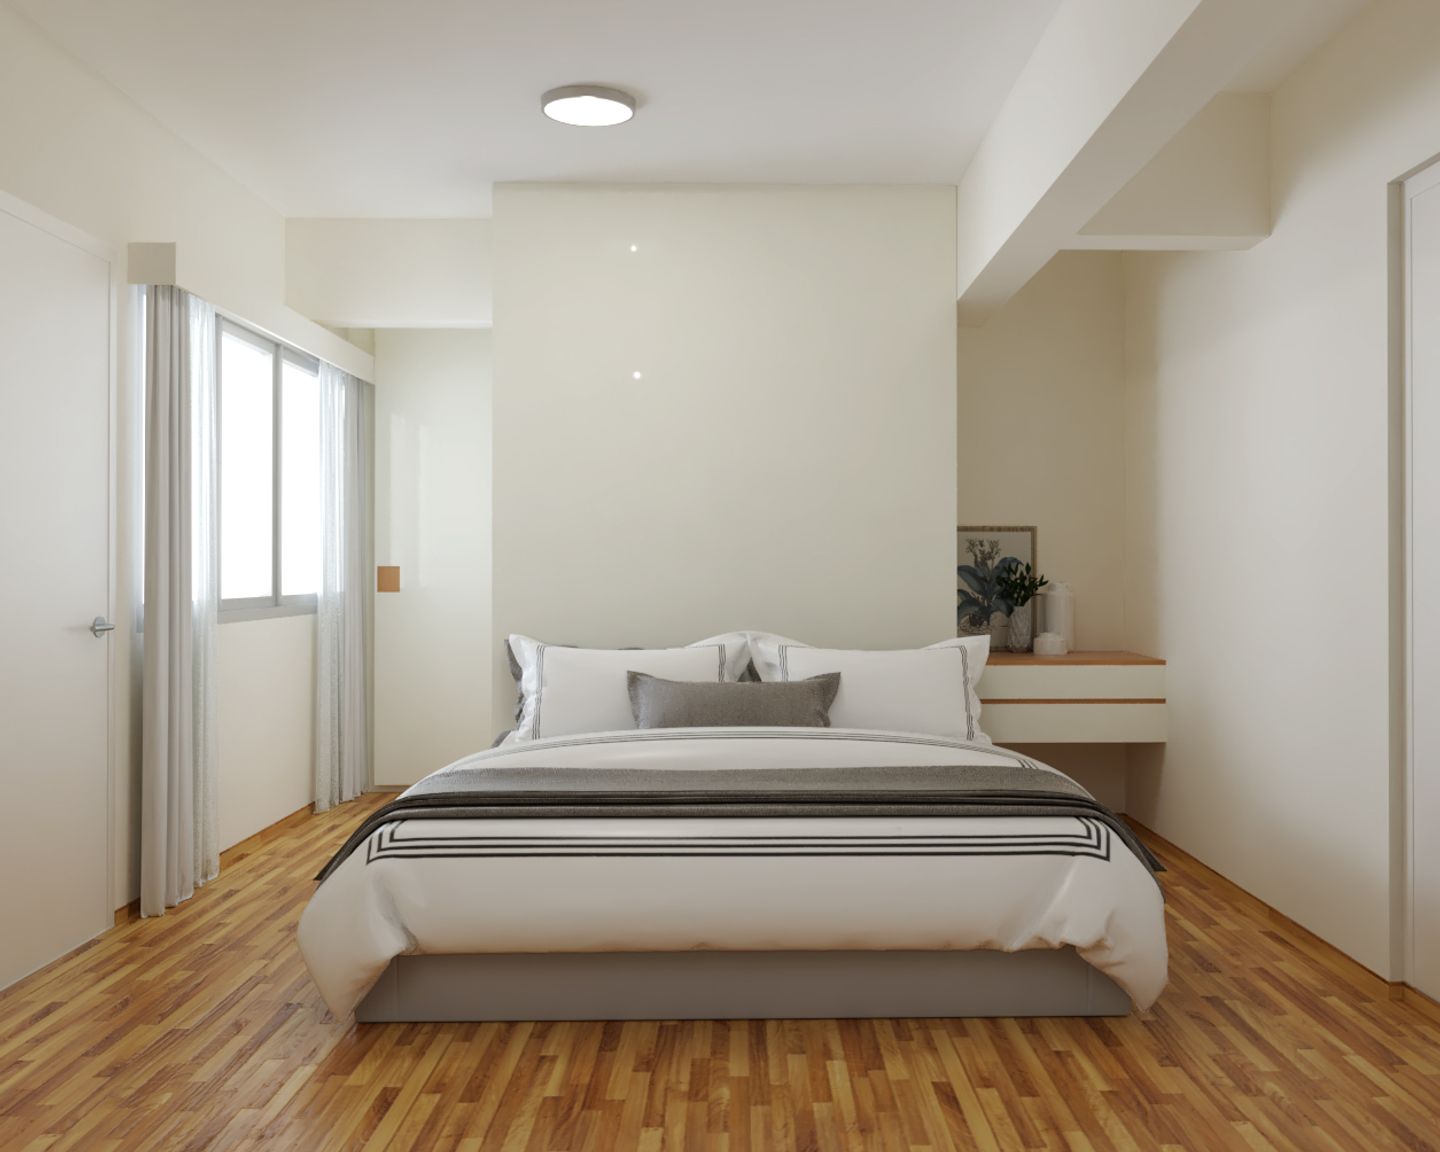 Master Bedroom With Wooden Flooring - Livspace